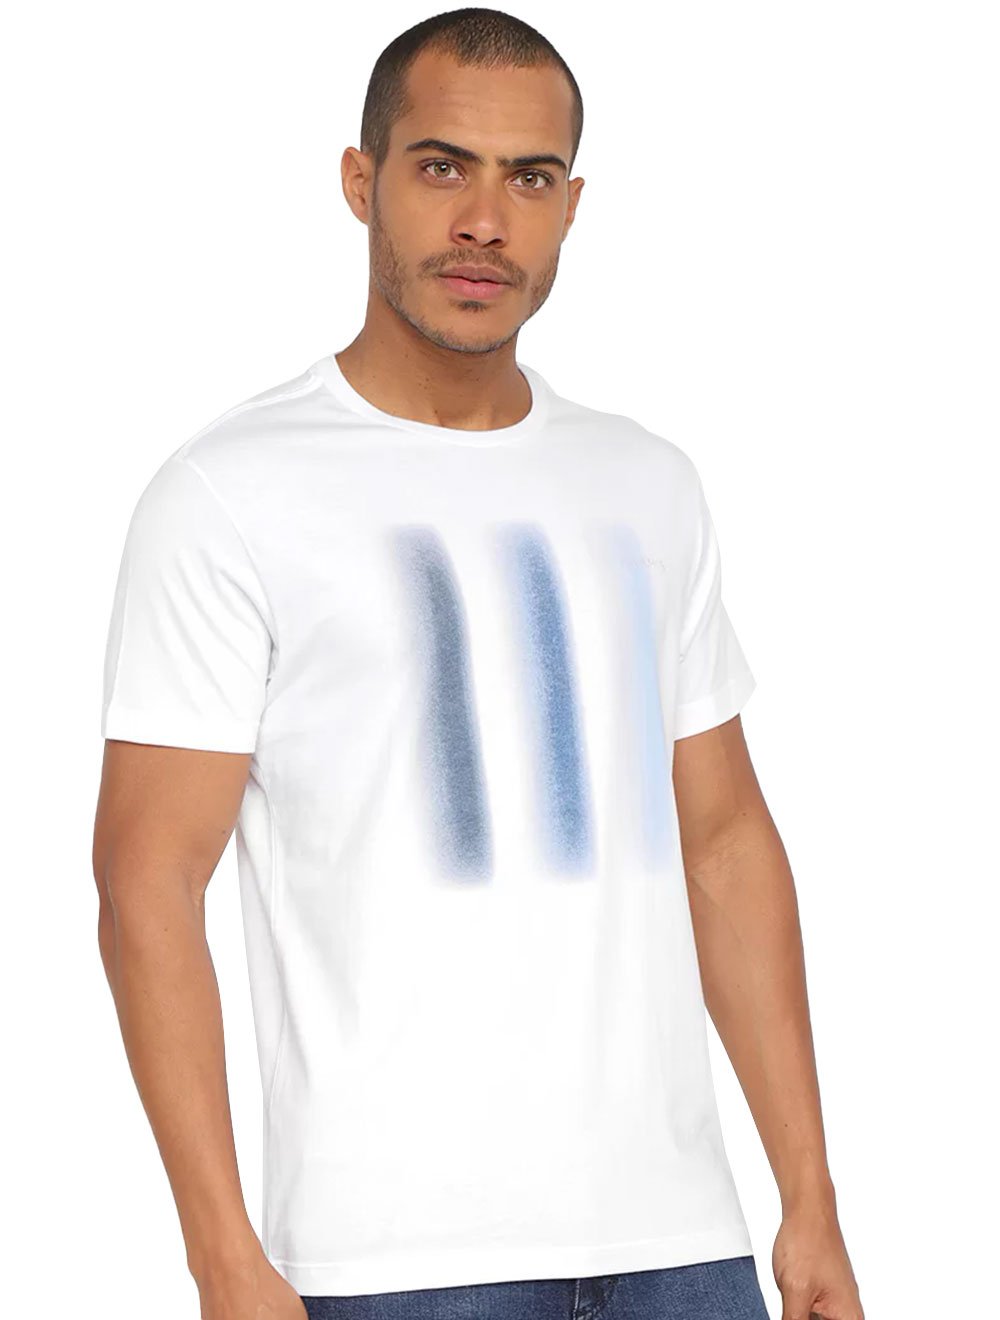 Camiseta Aramis Masculina Smoky Print Branca